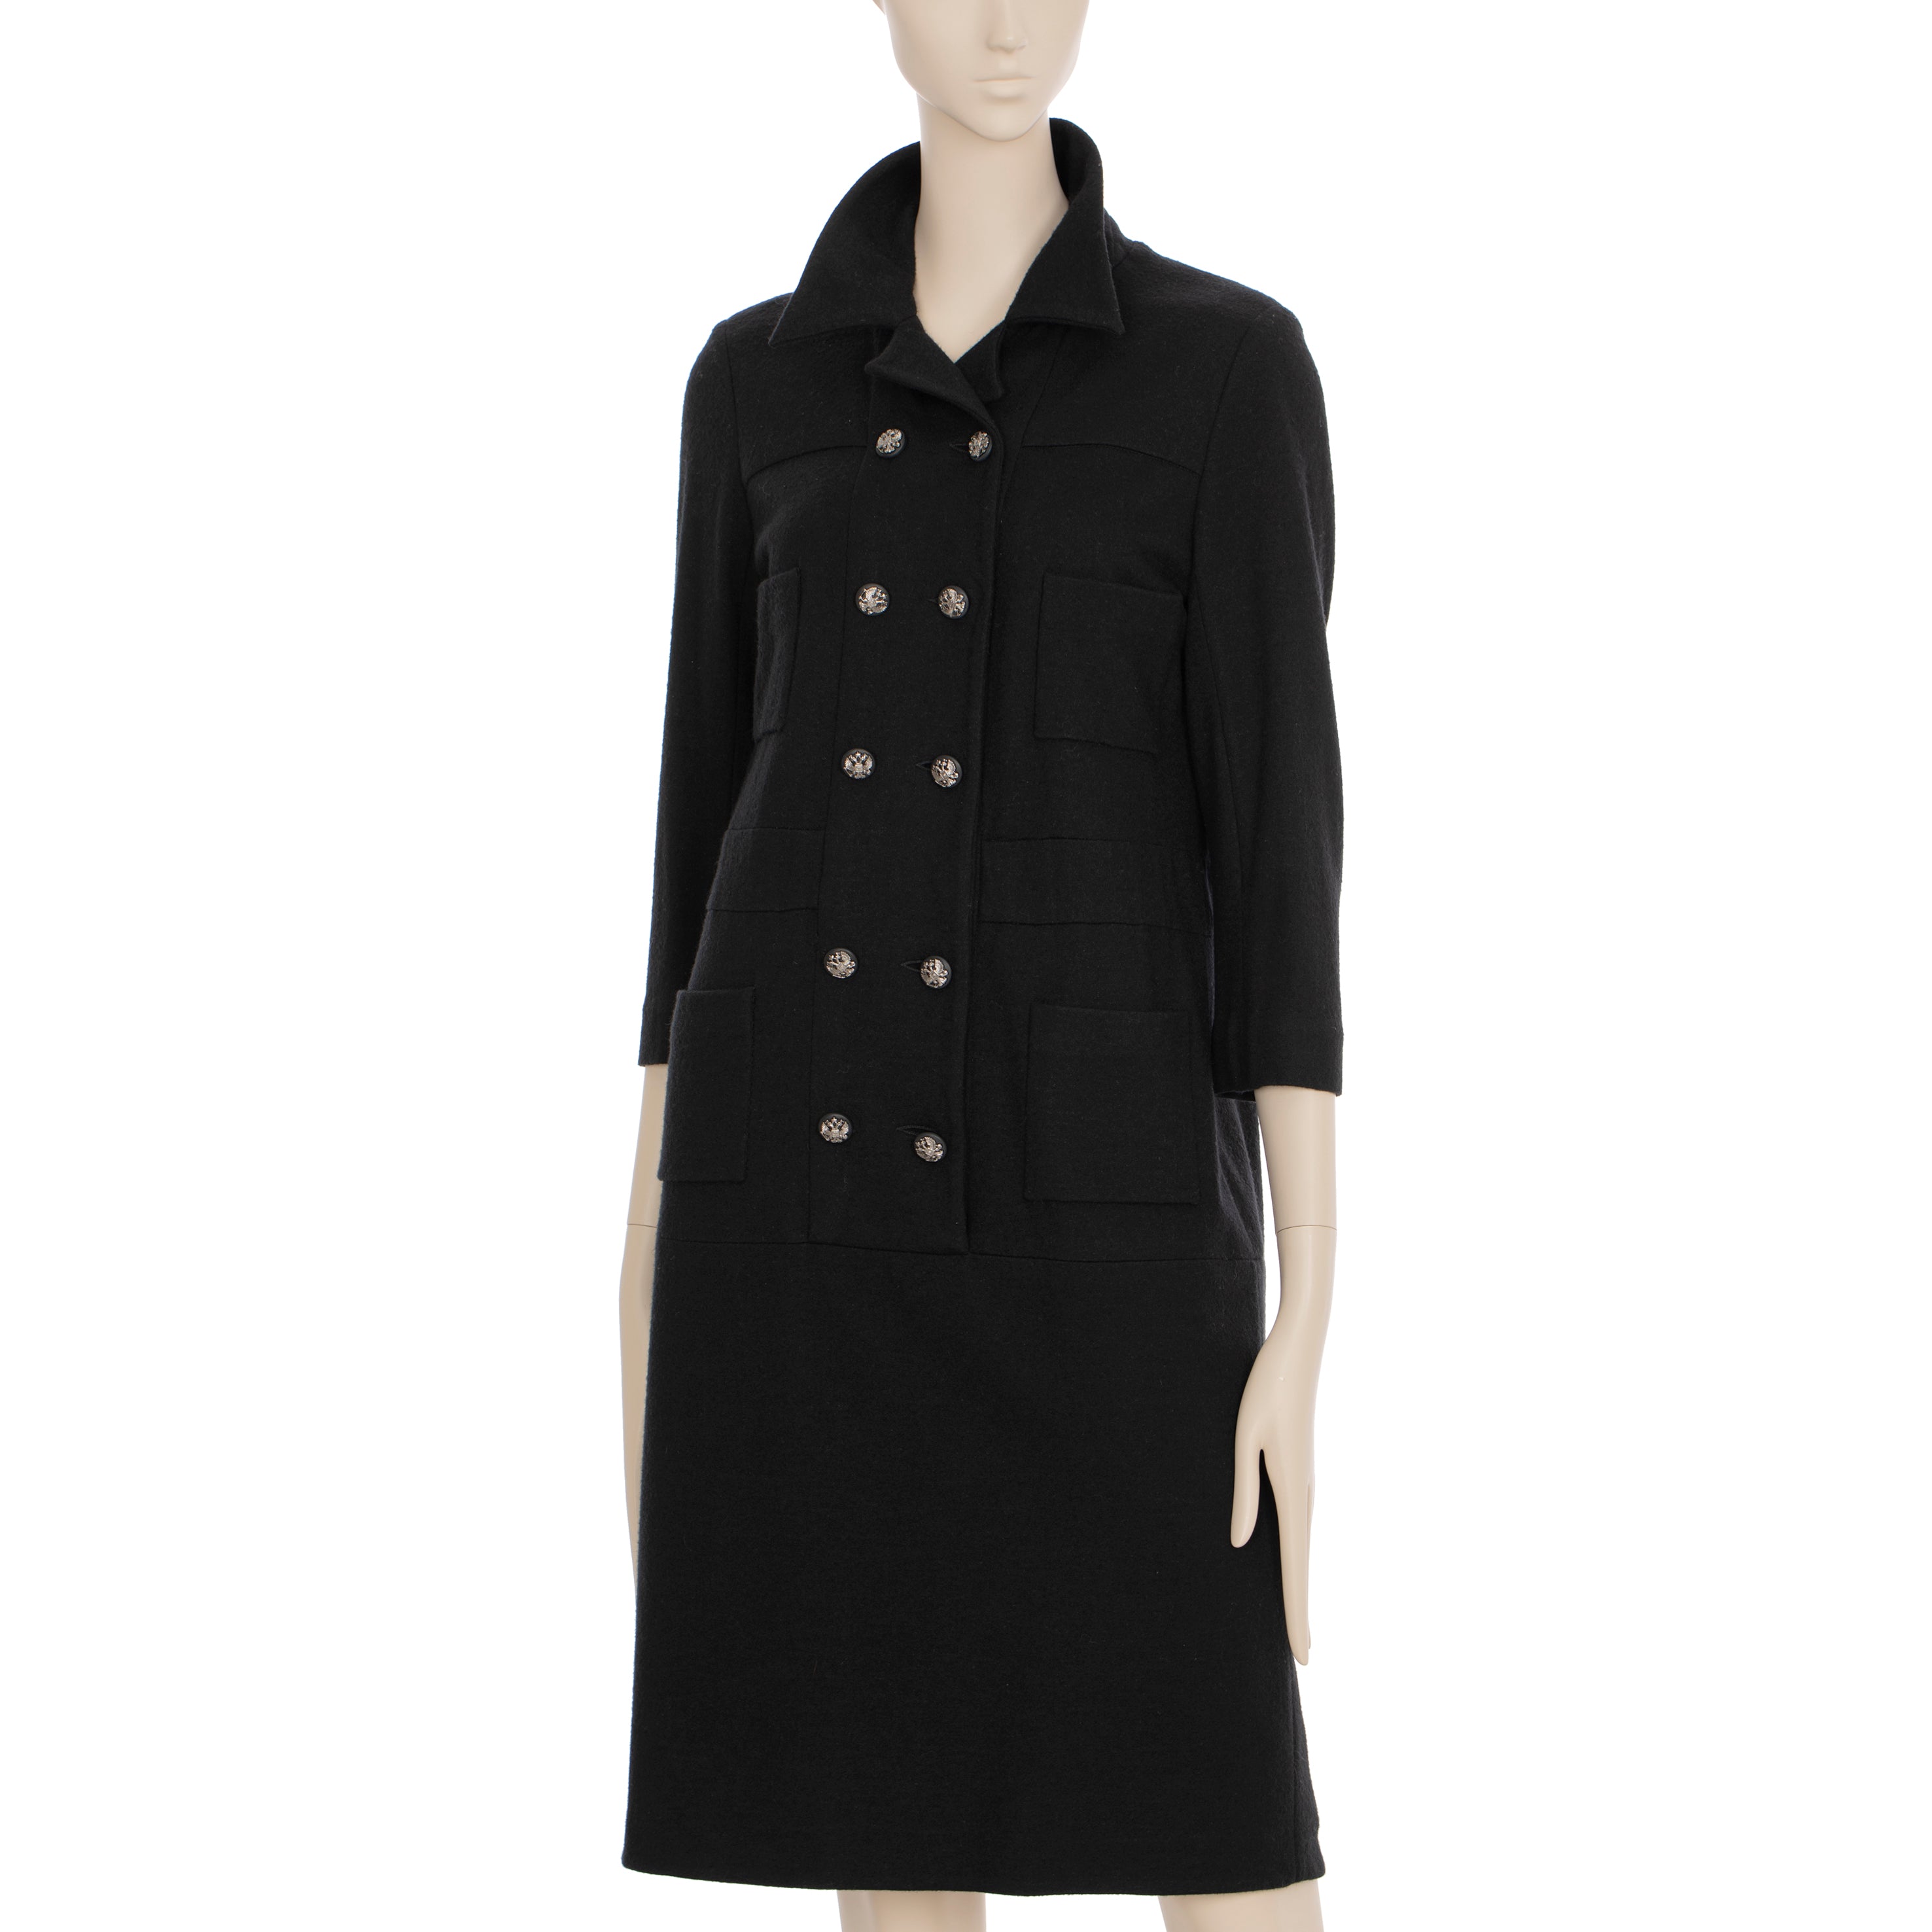 Chanel Long Black Wool Dress With Detachable Collar 40 FR